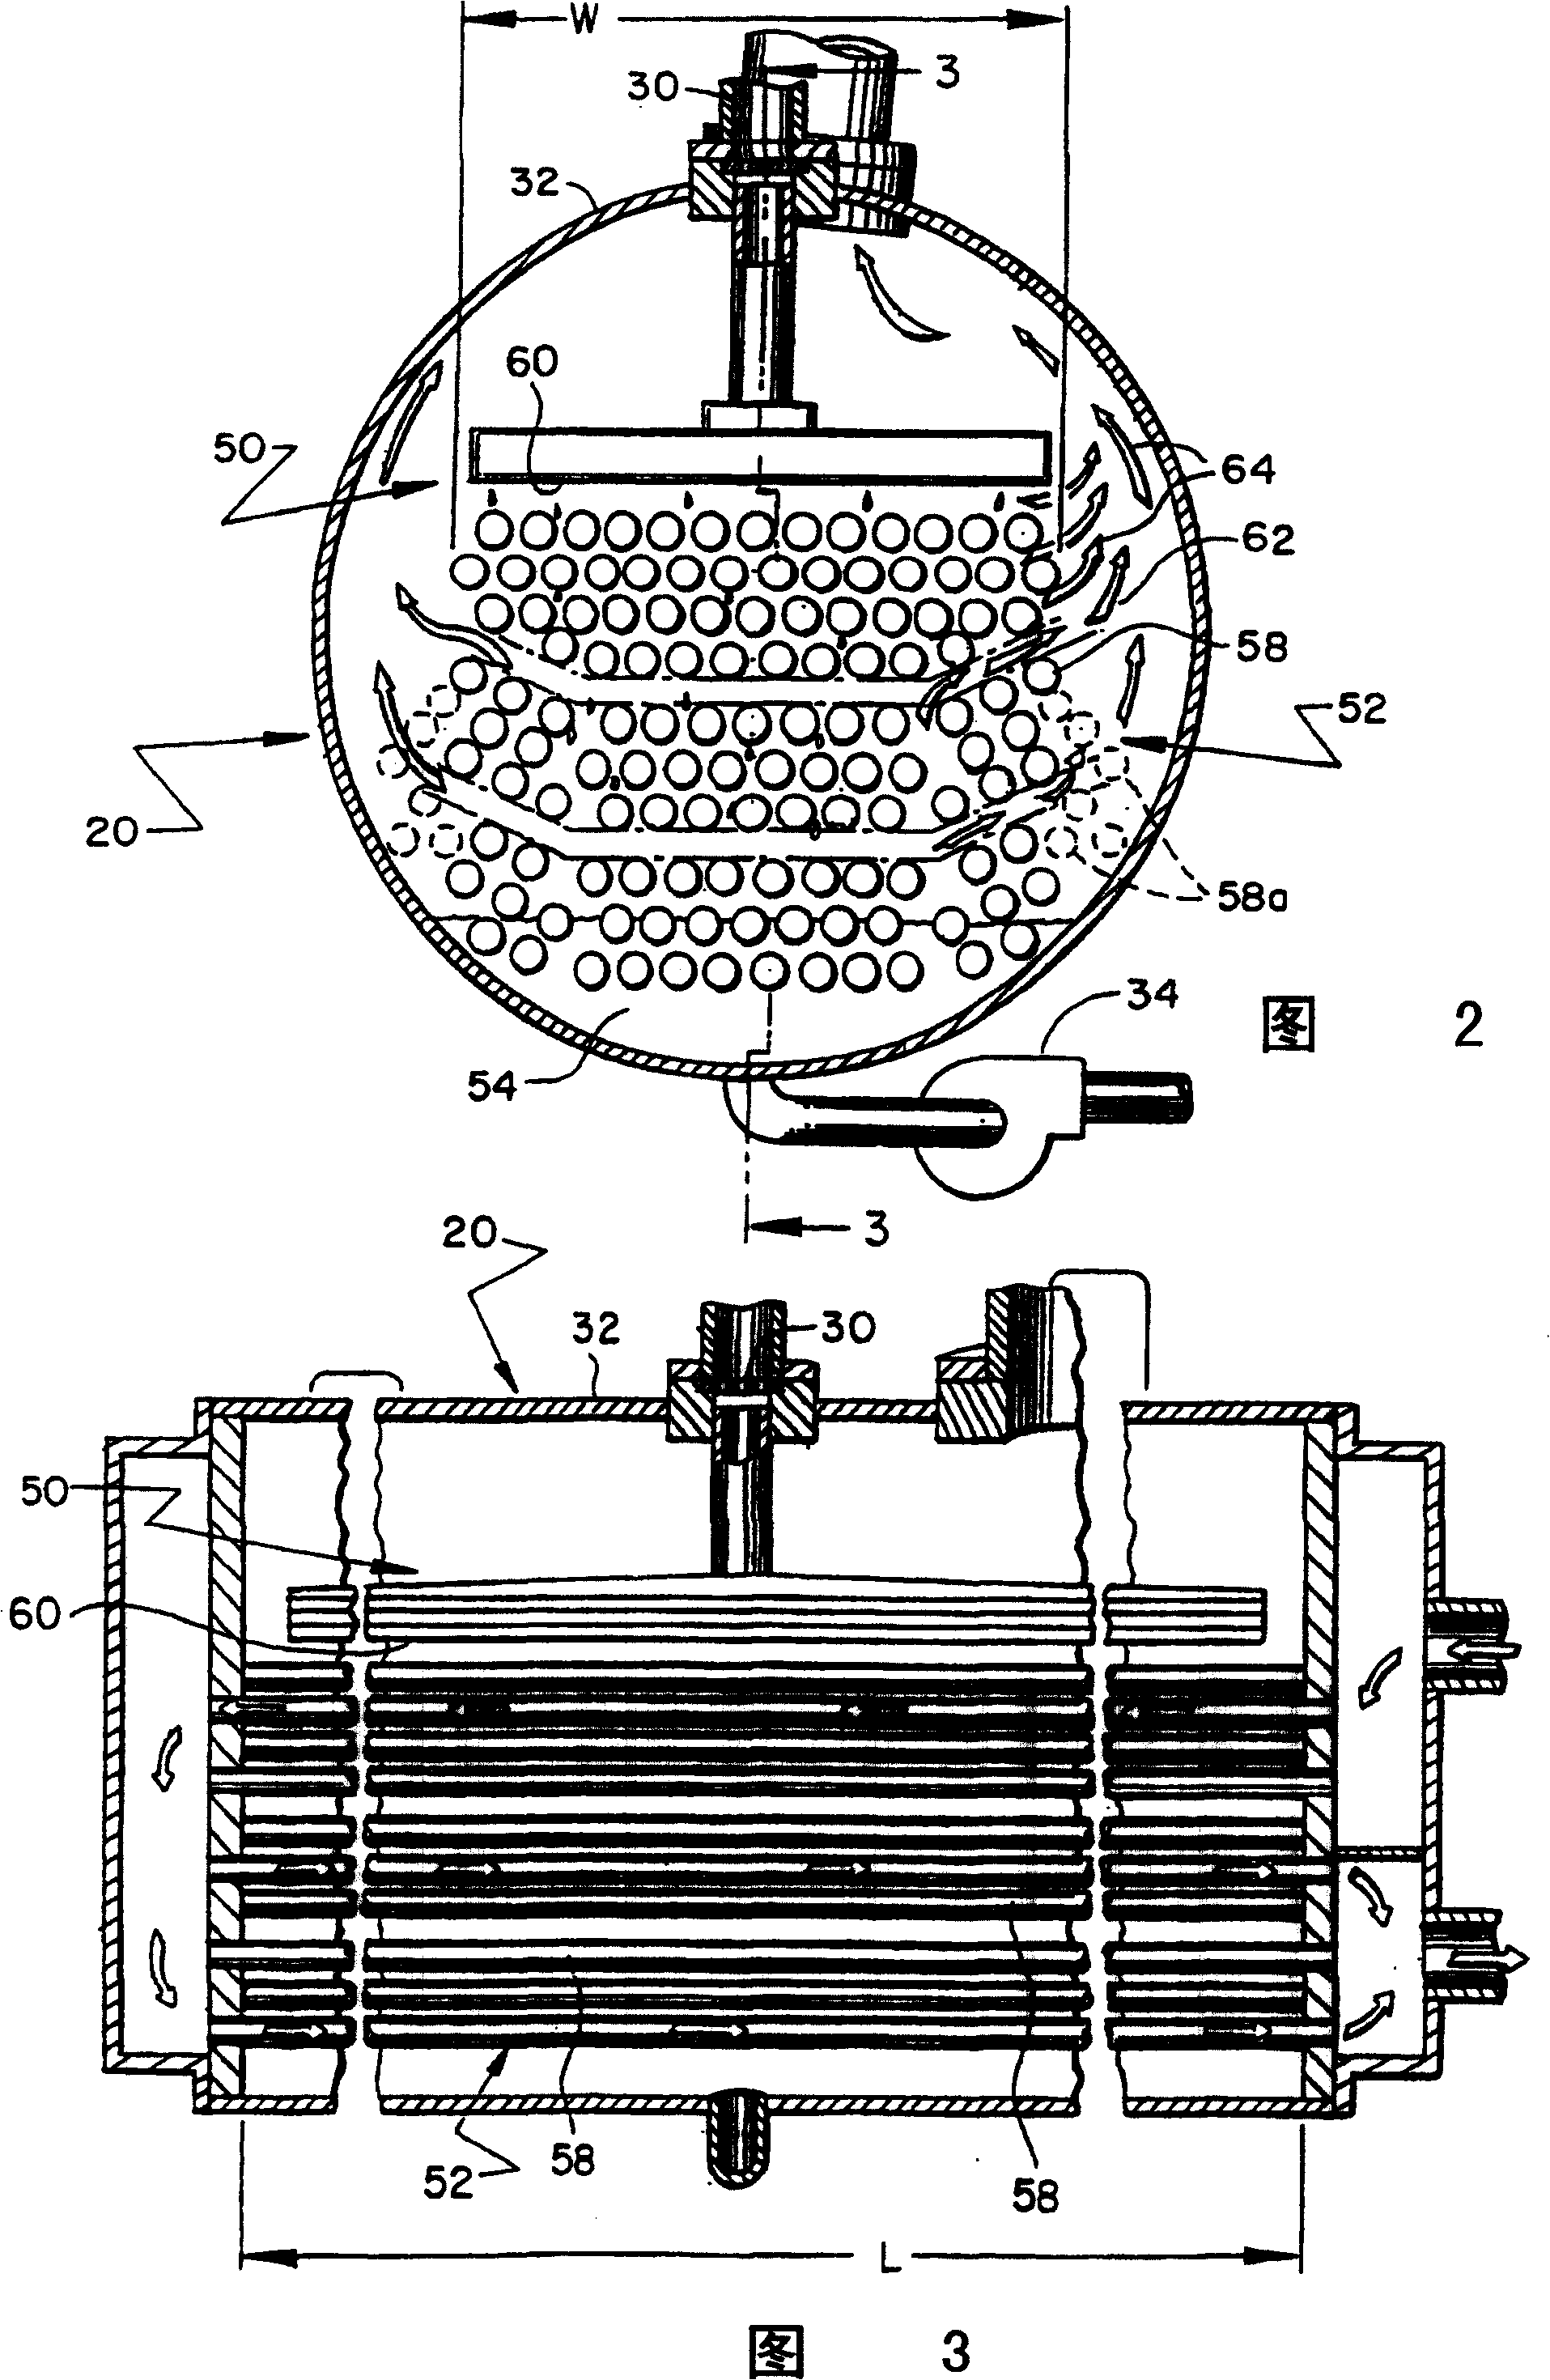 Falling film evaporator having two-phase refrigerant distribution system